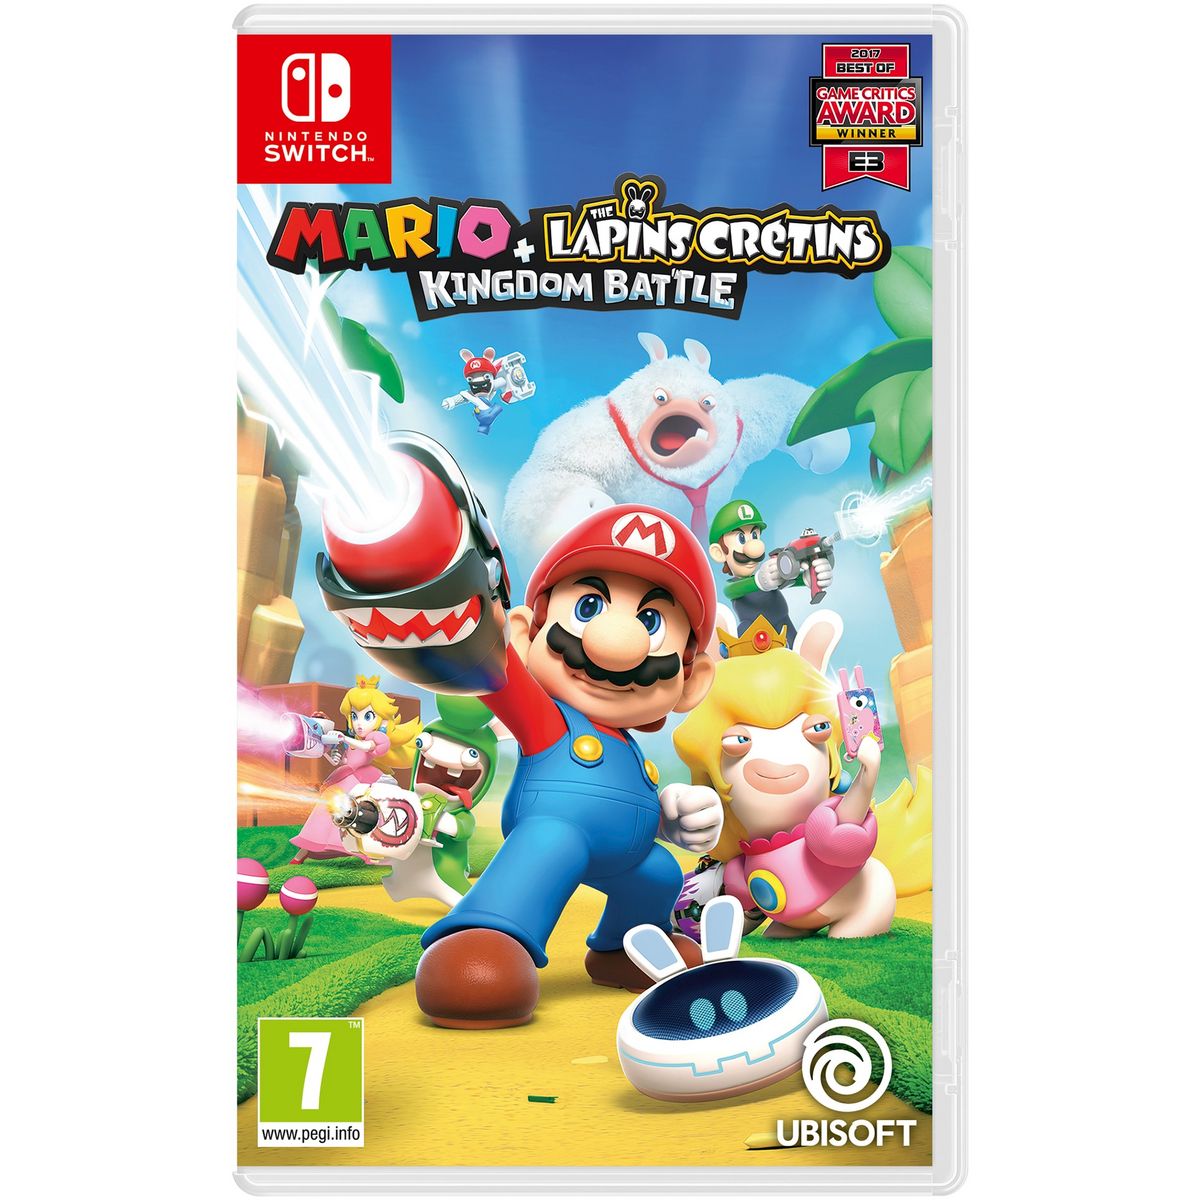 Ubi Soft Mario + The Lapins Crétins Kingdom Battle Nintendo SWITCH